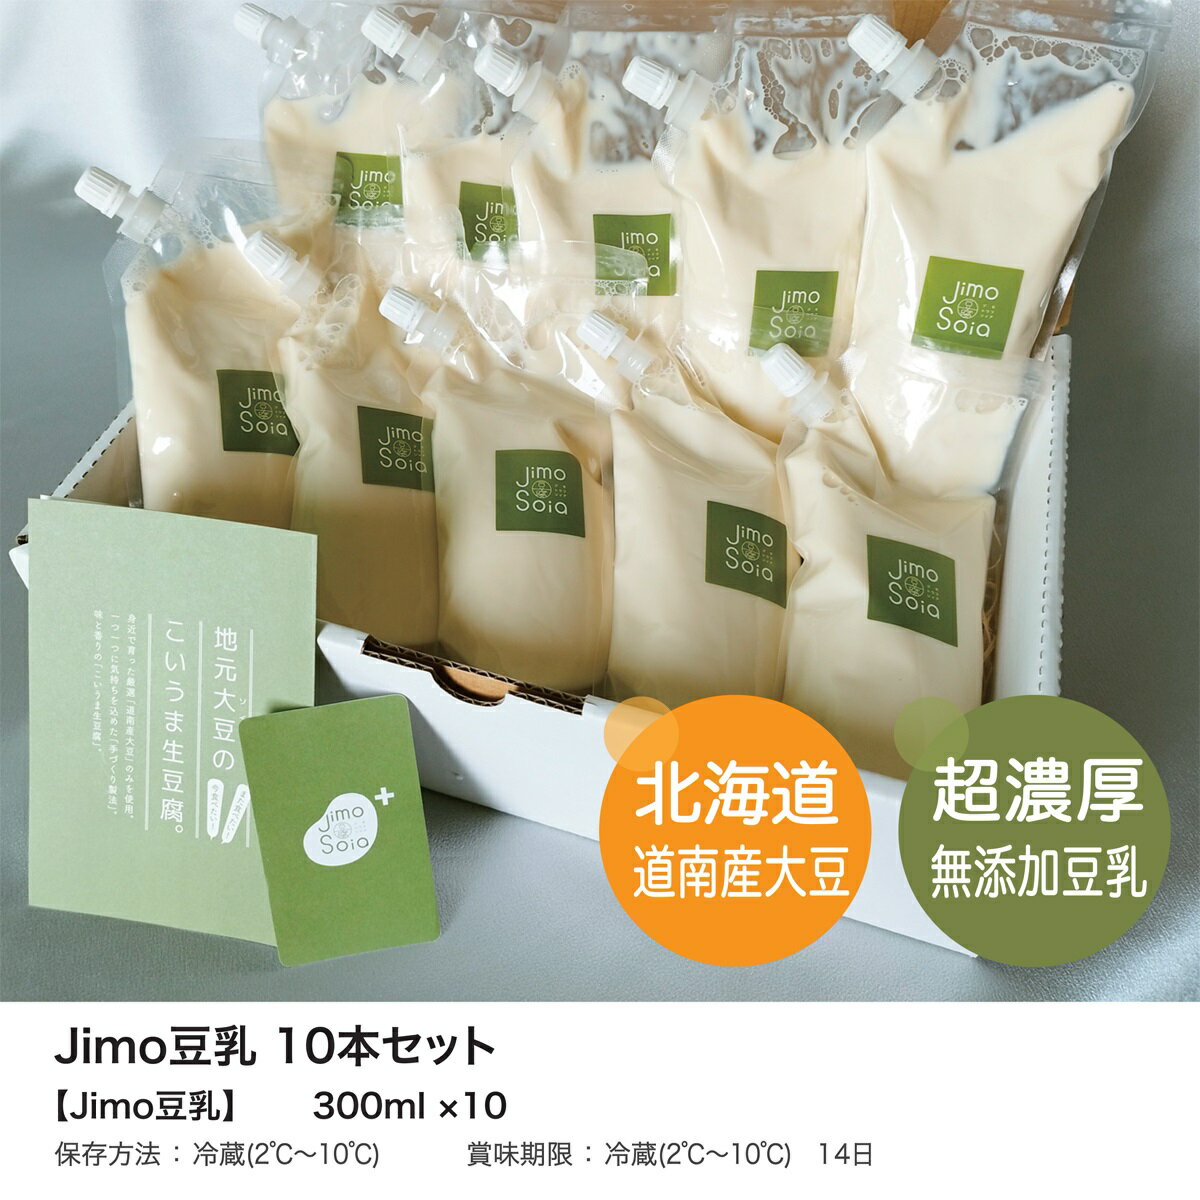 Jimo豆腐Soia 北海道の豆乳 Jimo豆乳 300ml×10本 豆乳 大豆 豆腐 とうふ 豆腐屋 ソイ ヘルシー 健康 美容